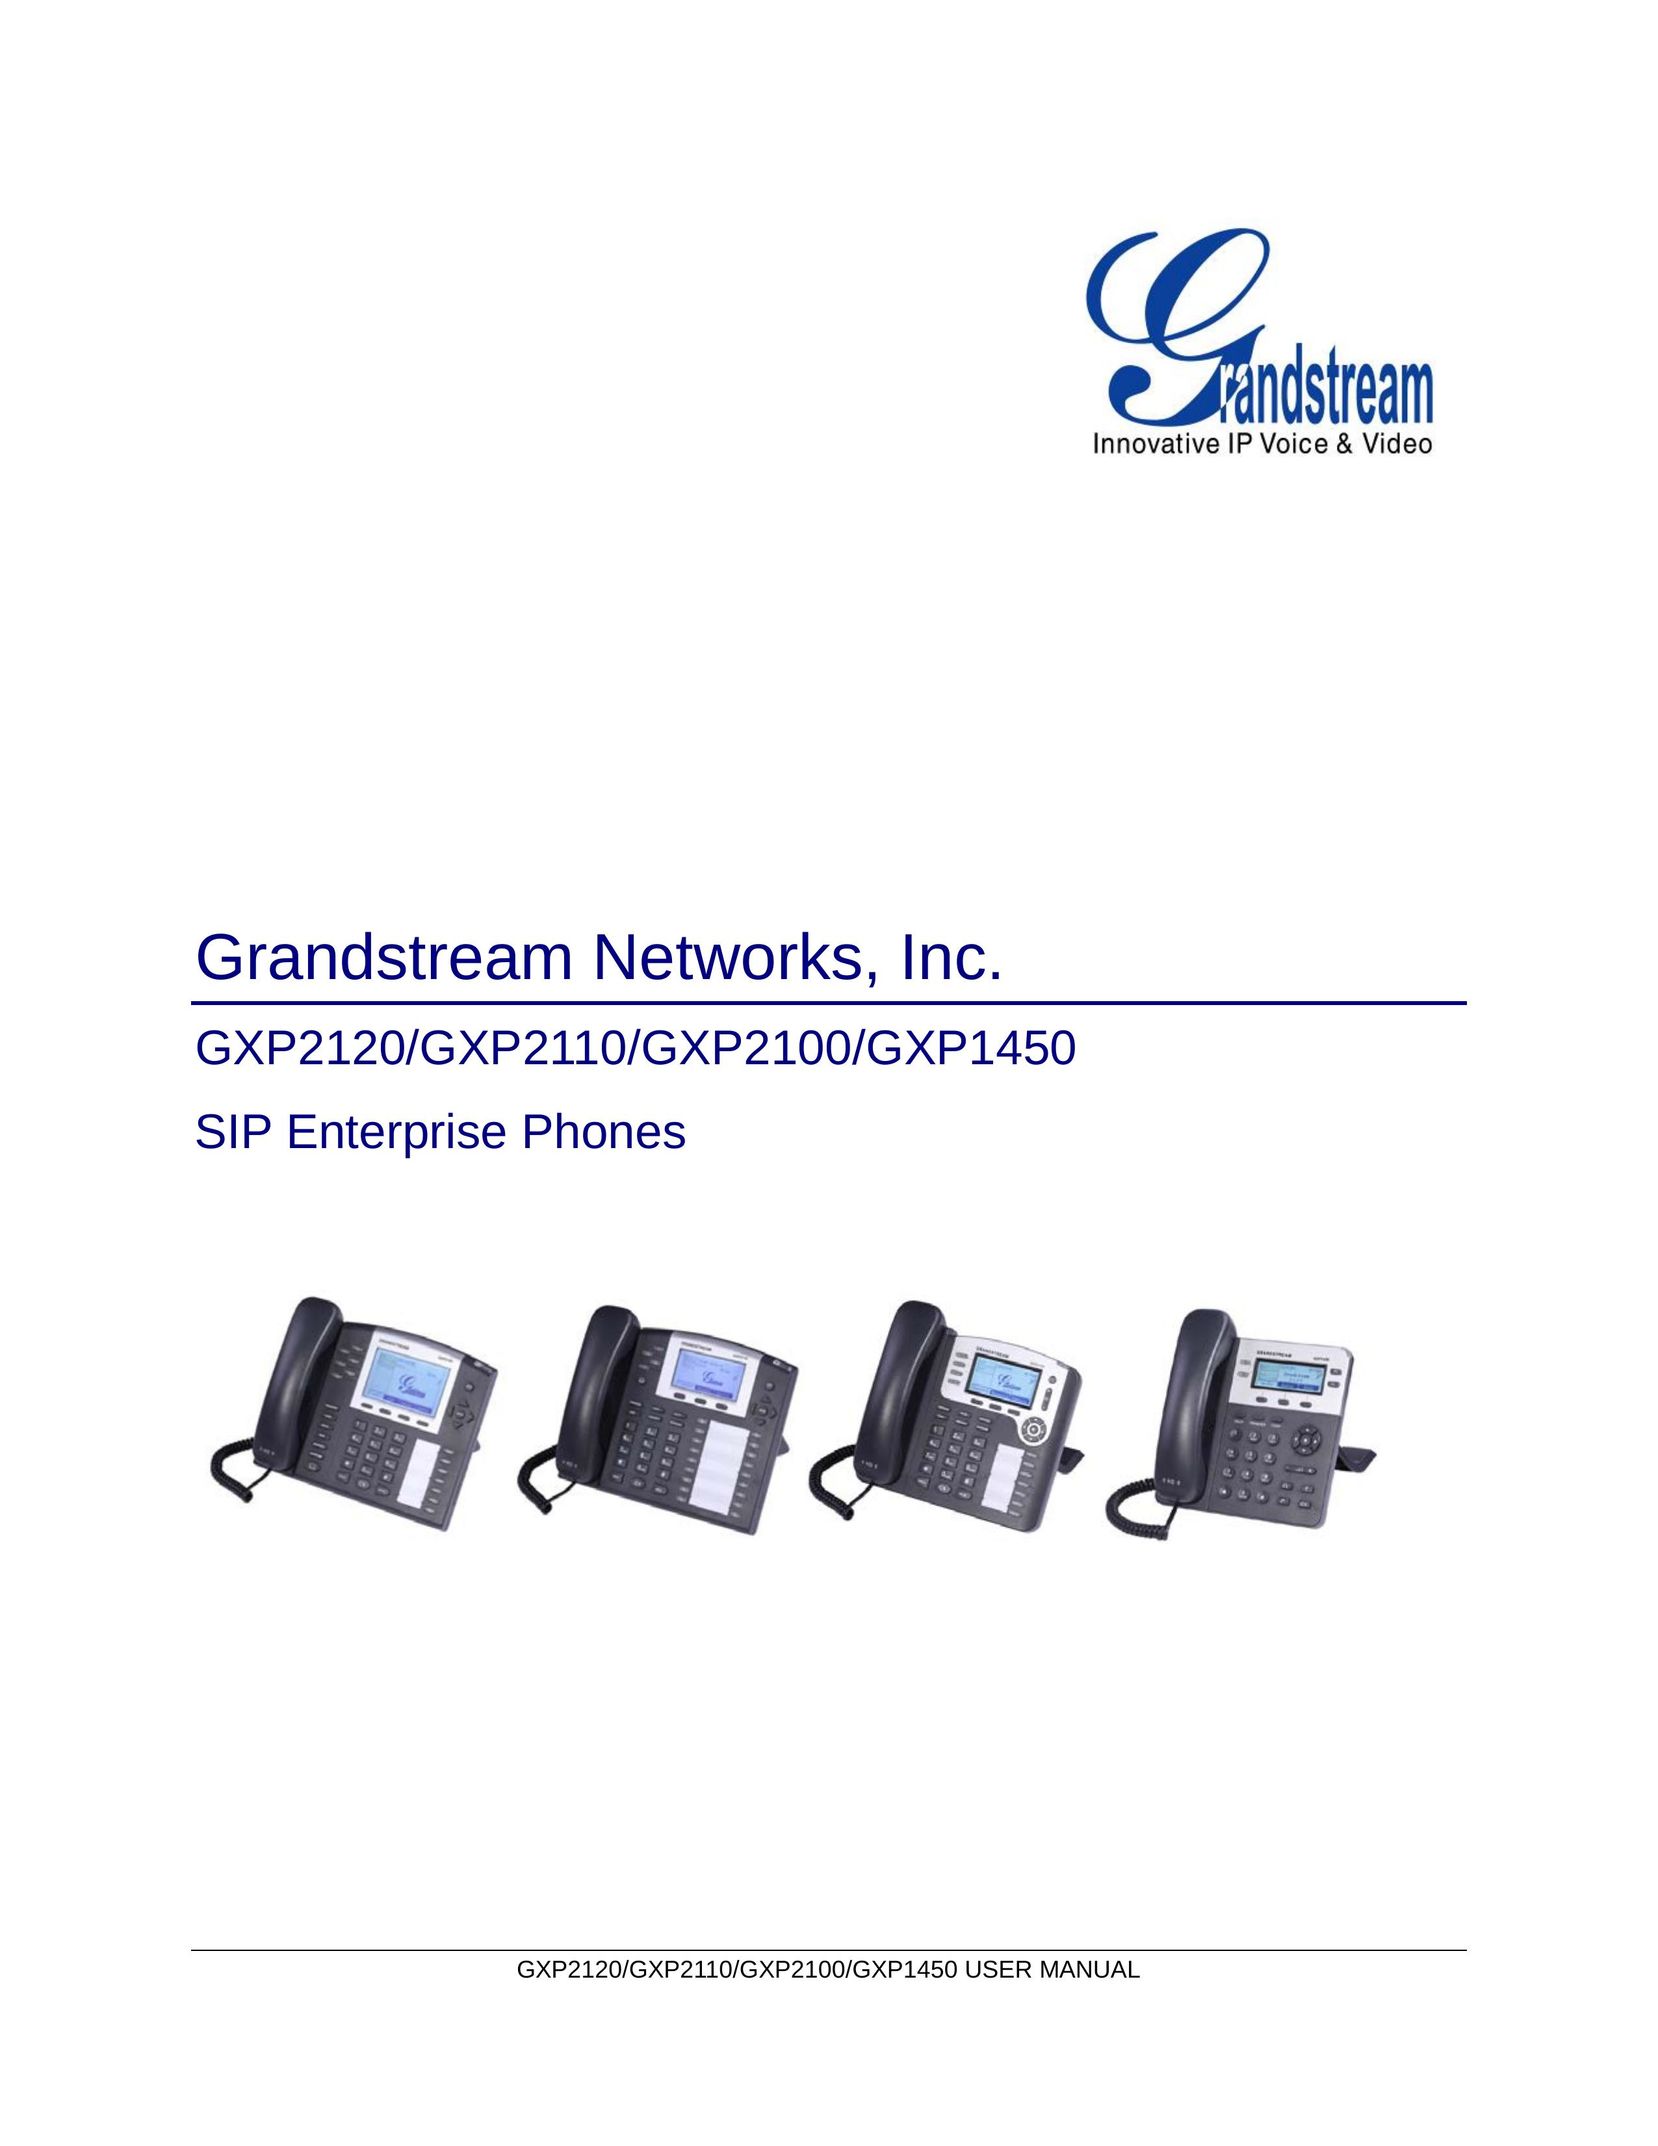 Grandstream Networks GXP2100 Telephone User Manual